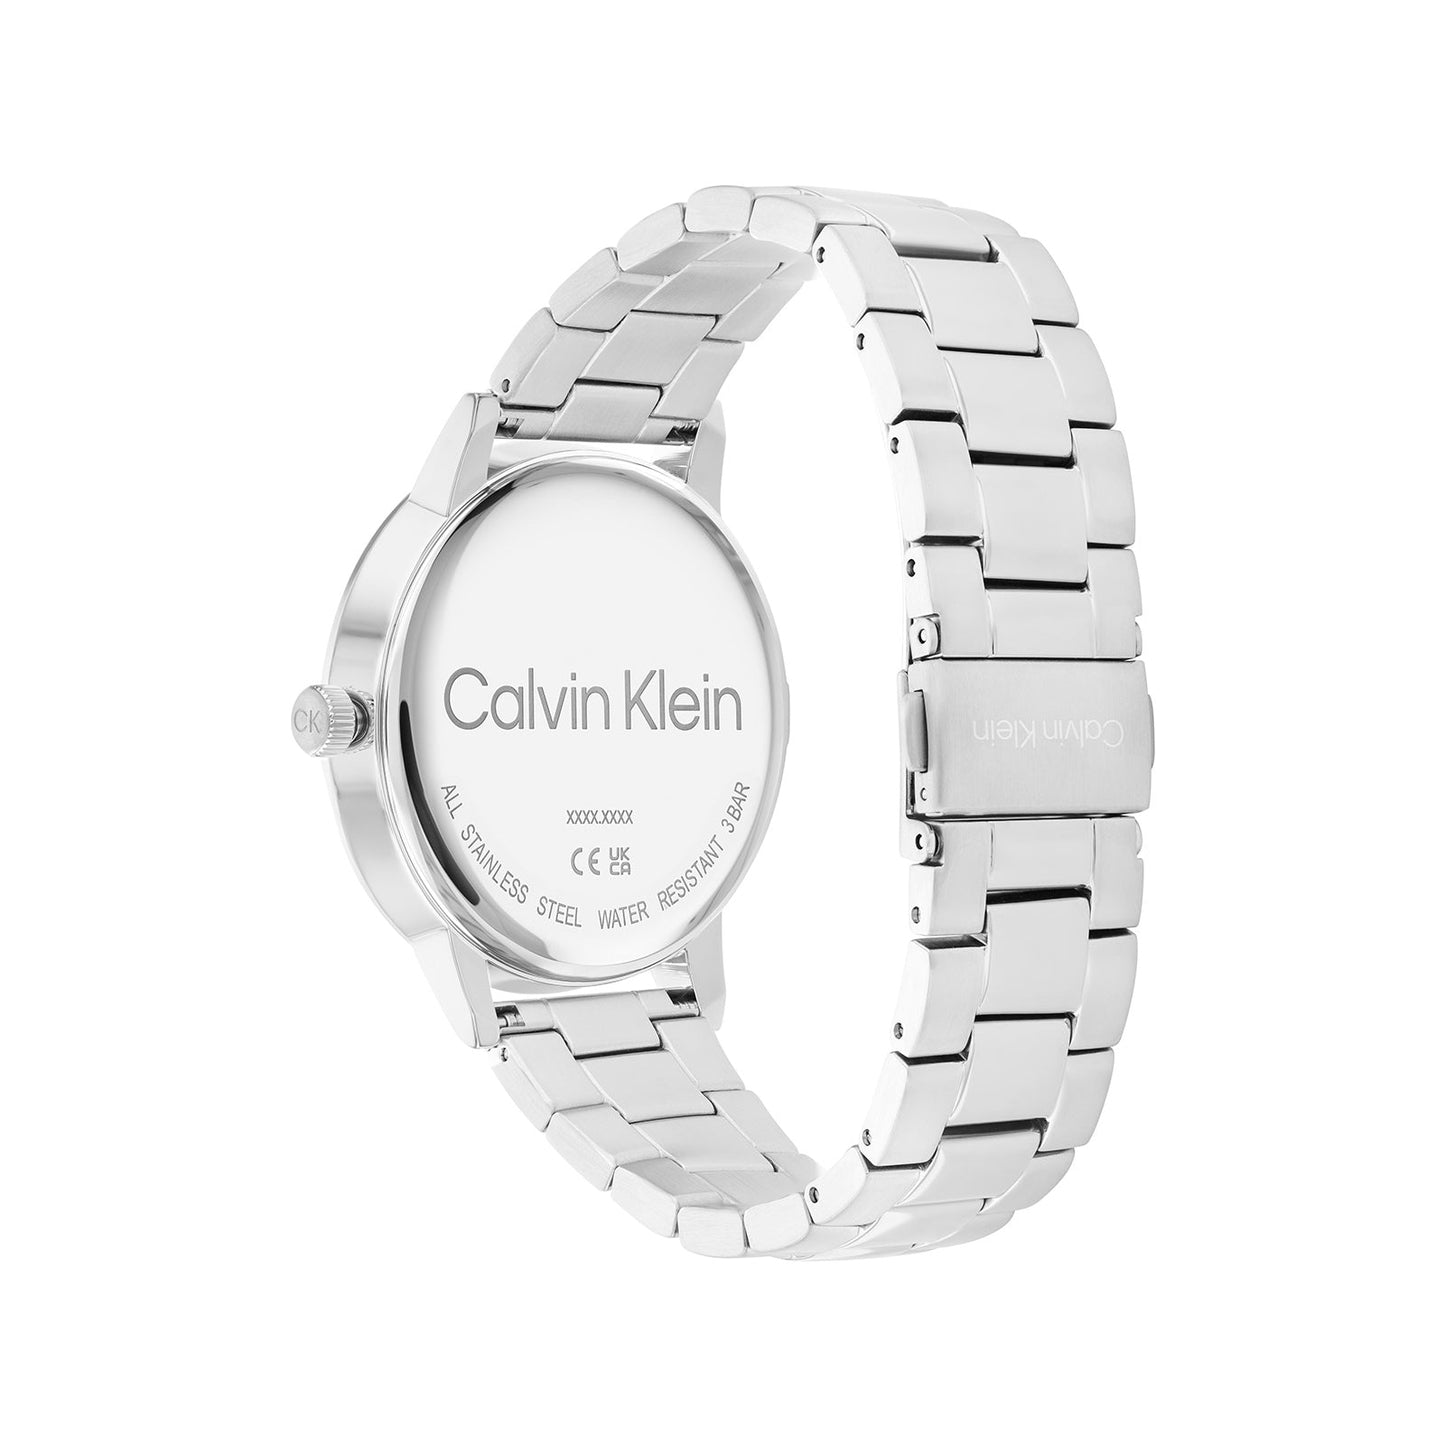 Calvin Klein 25200053 Men's Steel Watch